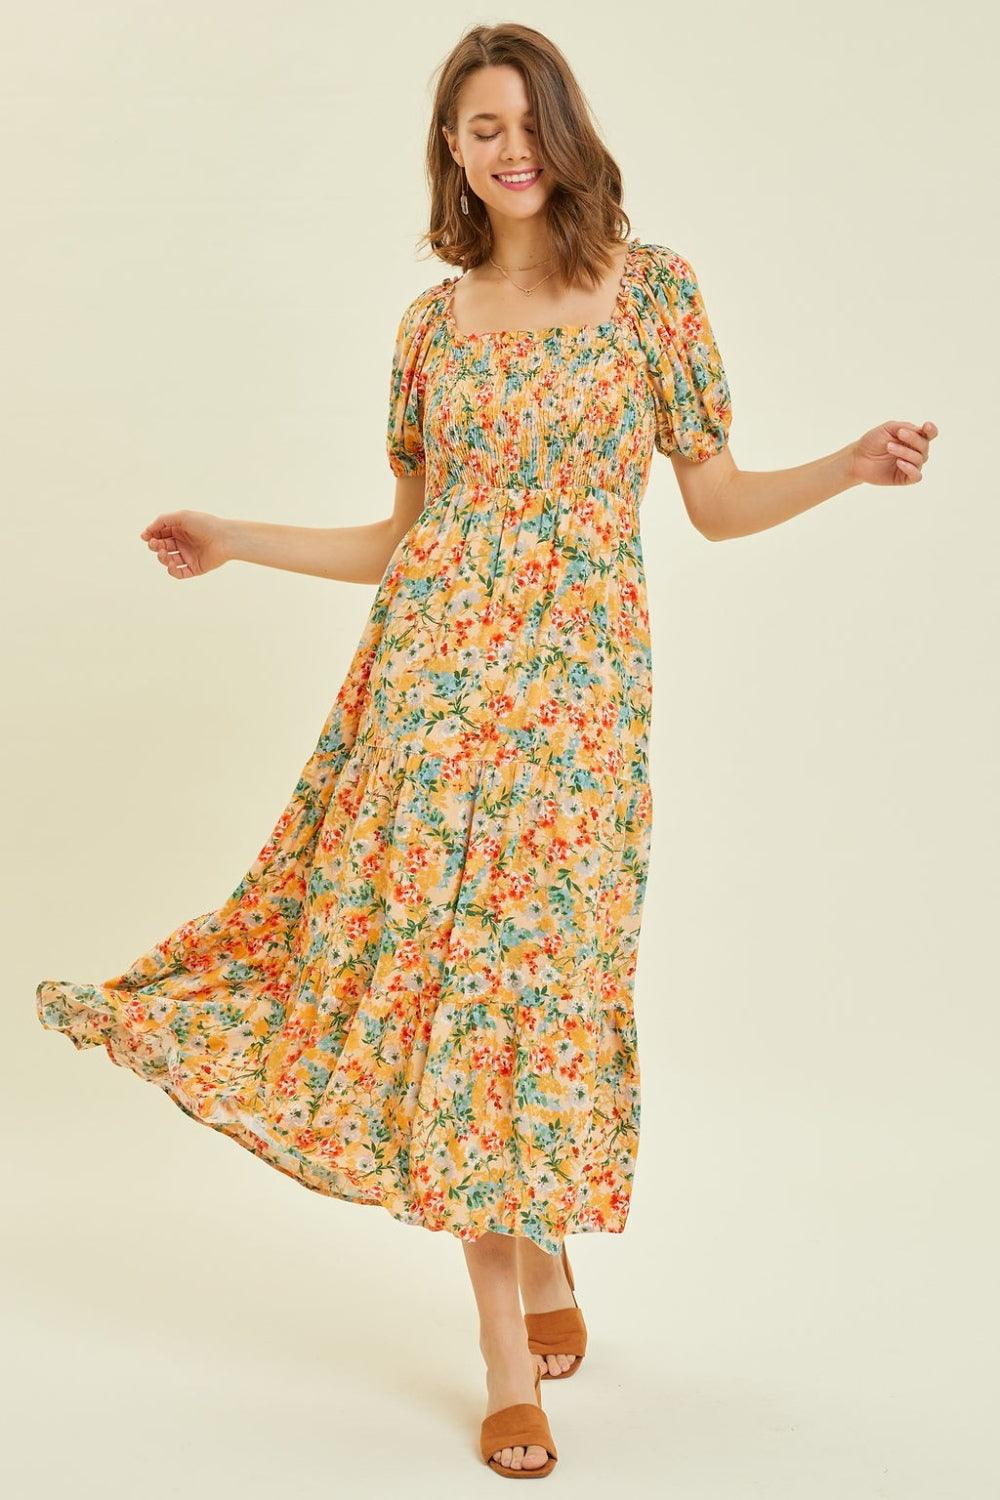 HEYSON Full Size Floral Smocked Tiered Midi Dress - AMIClubwear